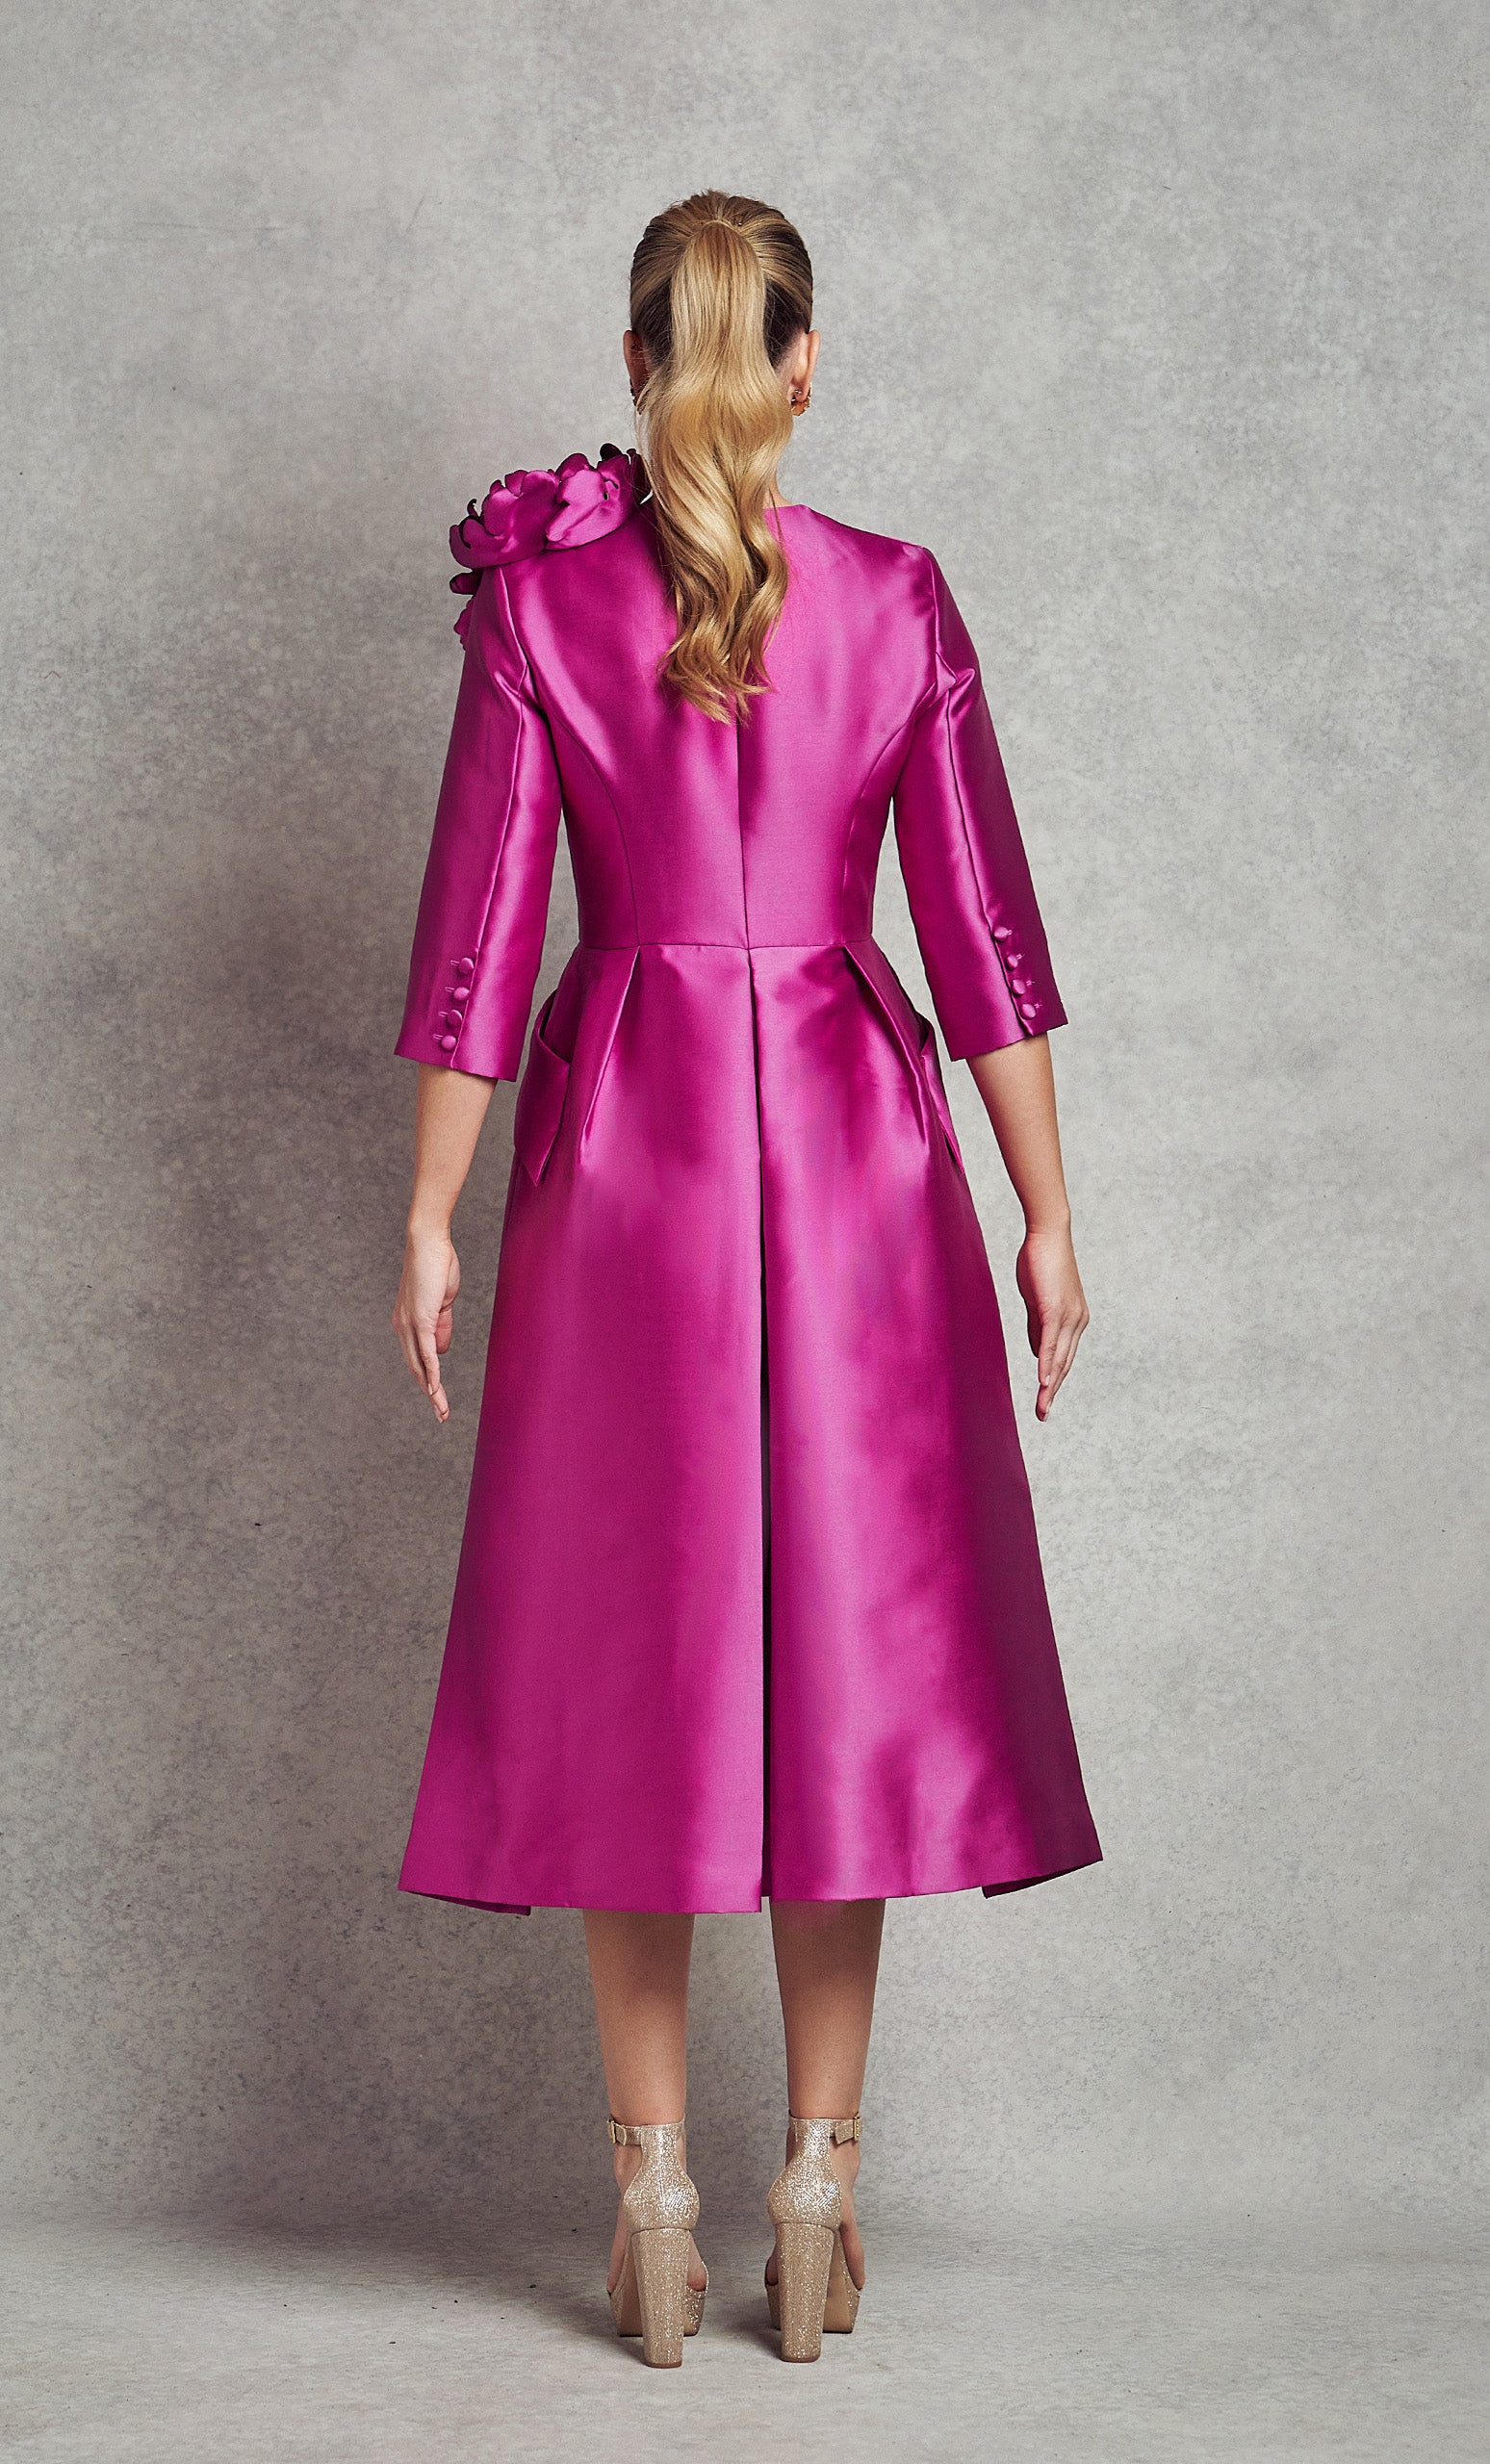 Jackie O Dress Coat - Fuchsia (With Embellishment)